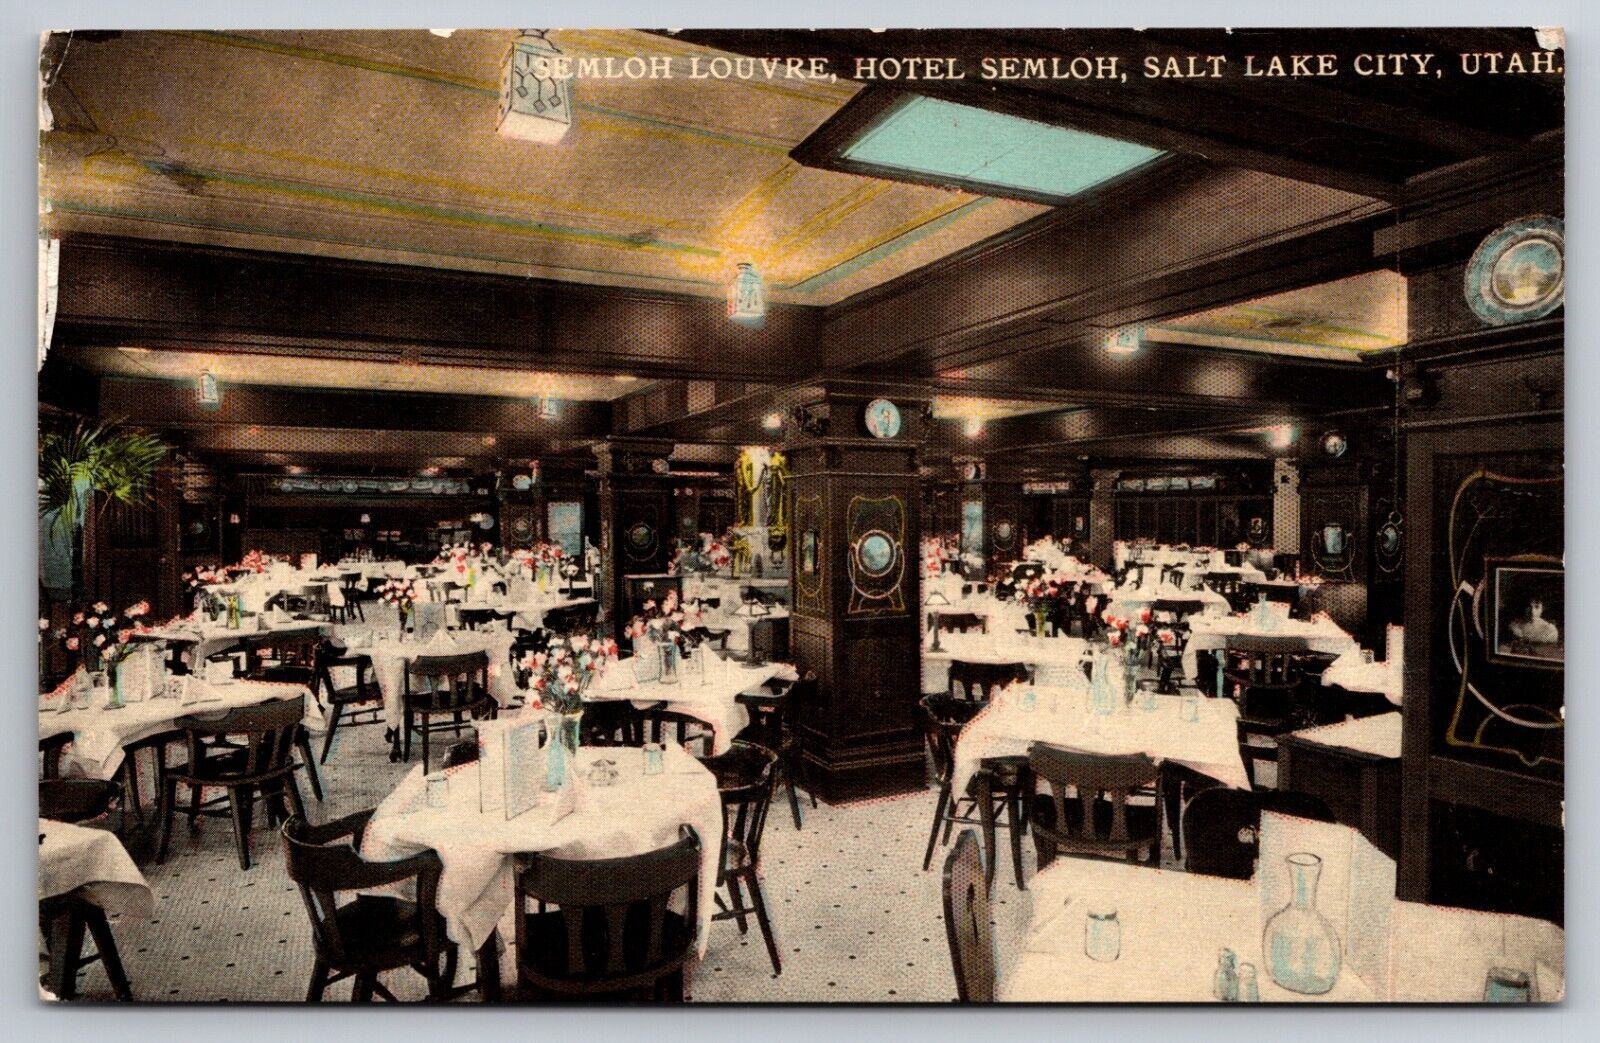 Semloh Louvre Hotel Semloh Salt Lake City Utah Interior Dining Room c1910 PC